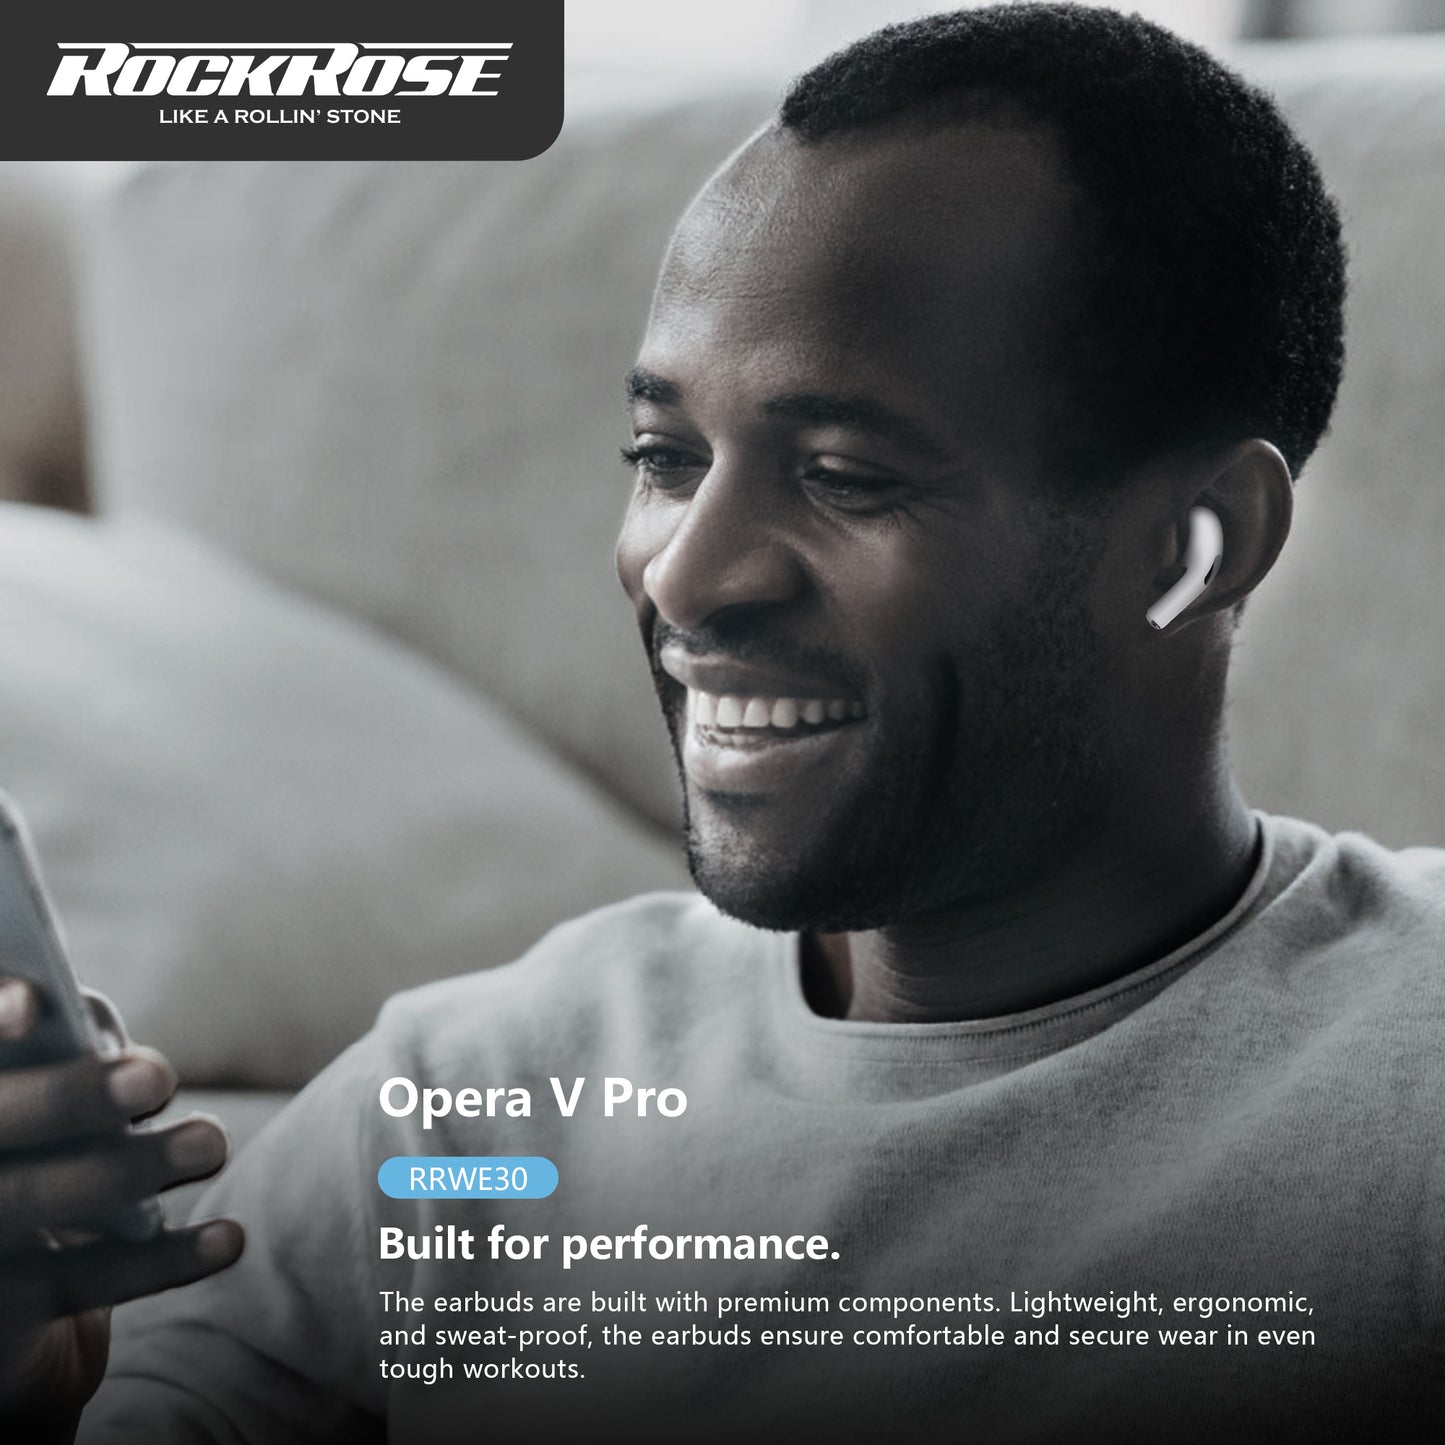 RockRose Opera V Pro True Wireless Stereo with ANC